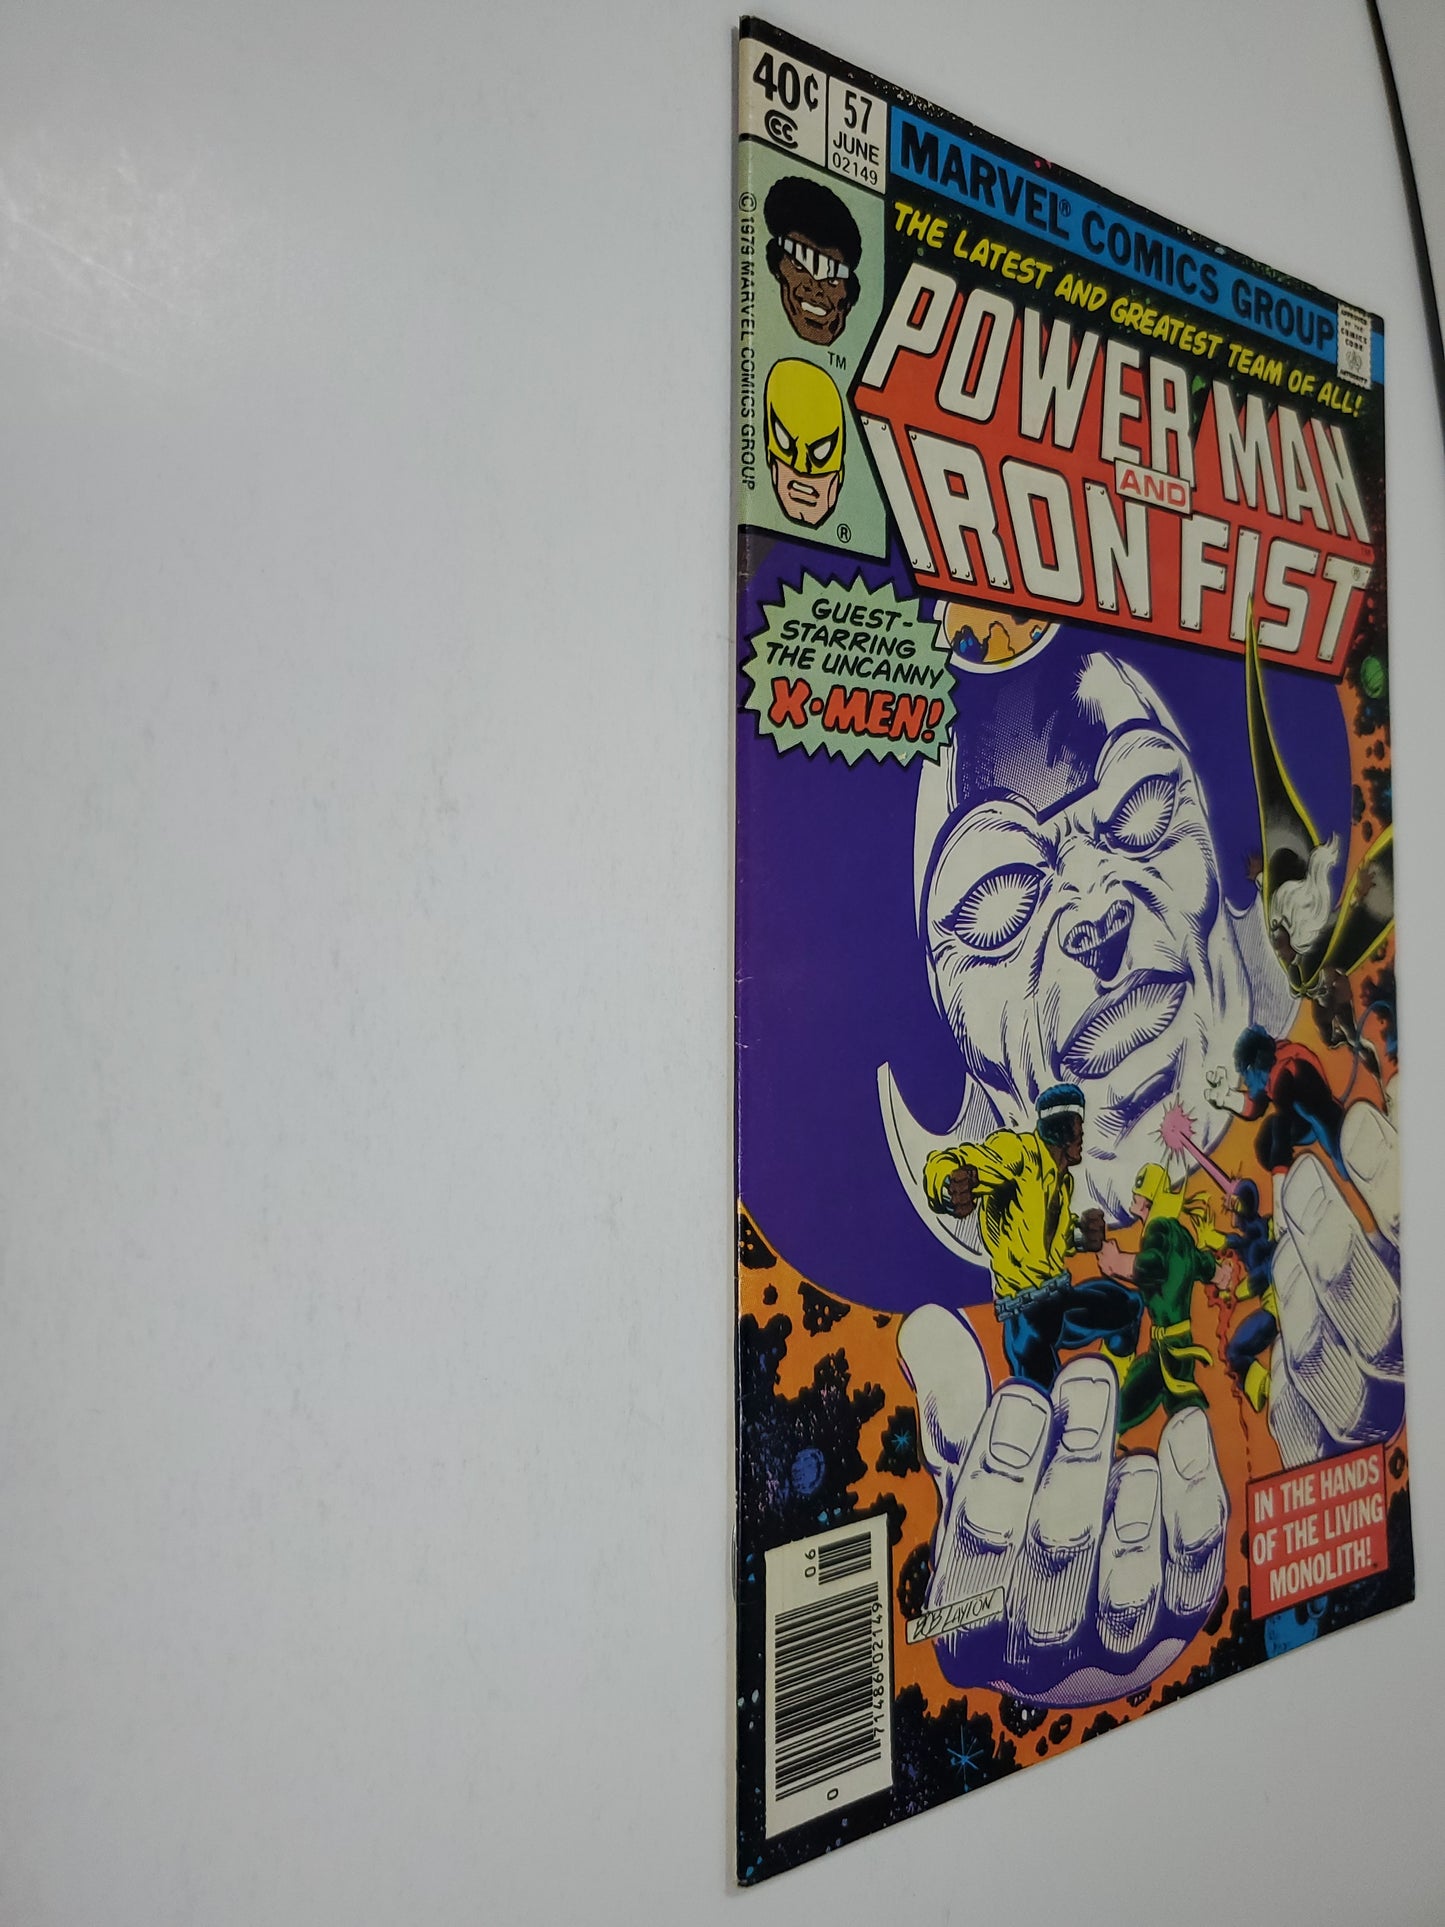 Marvel Power Man And Iron Fist #57